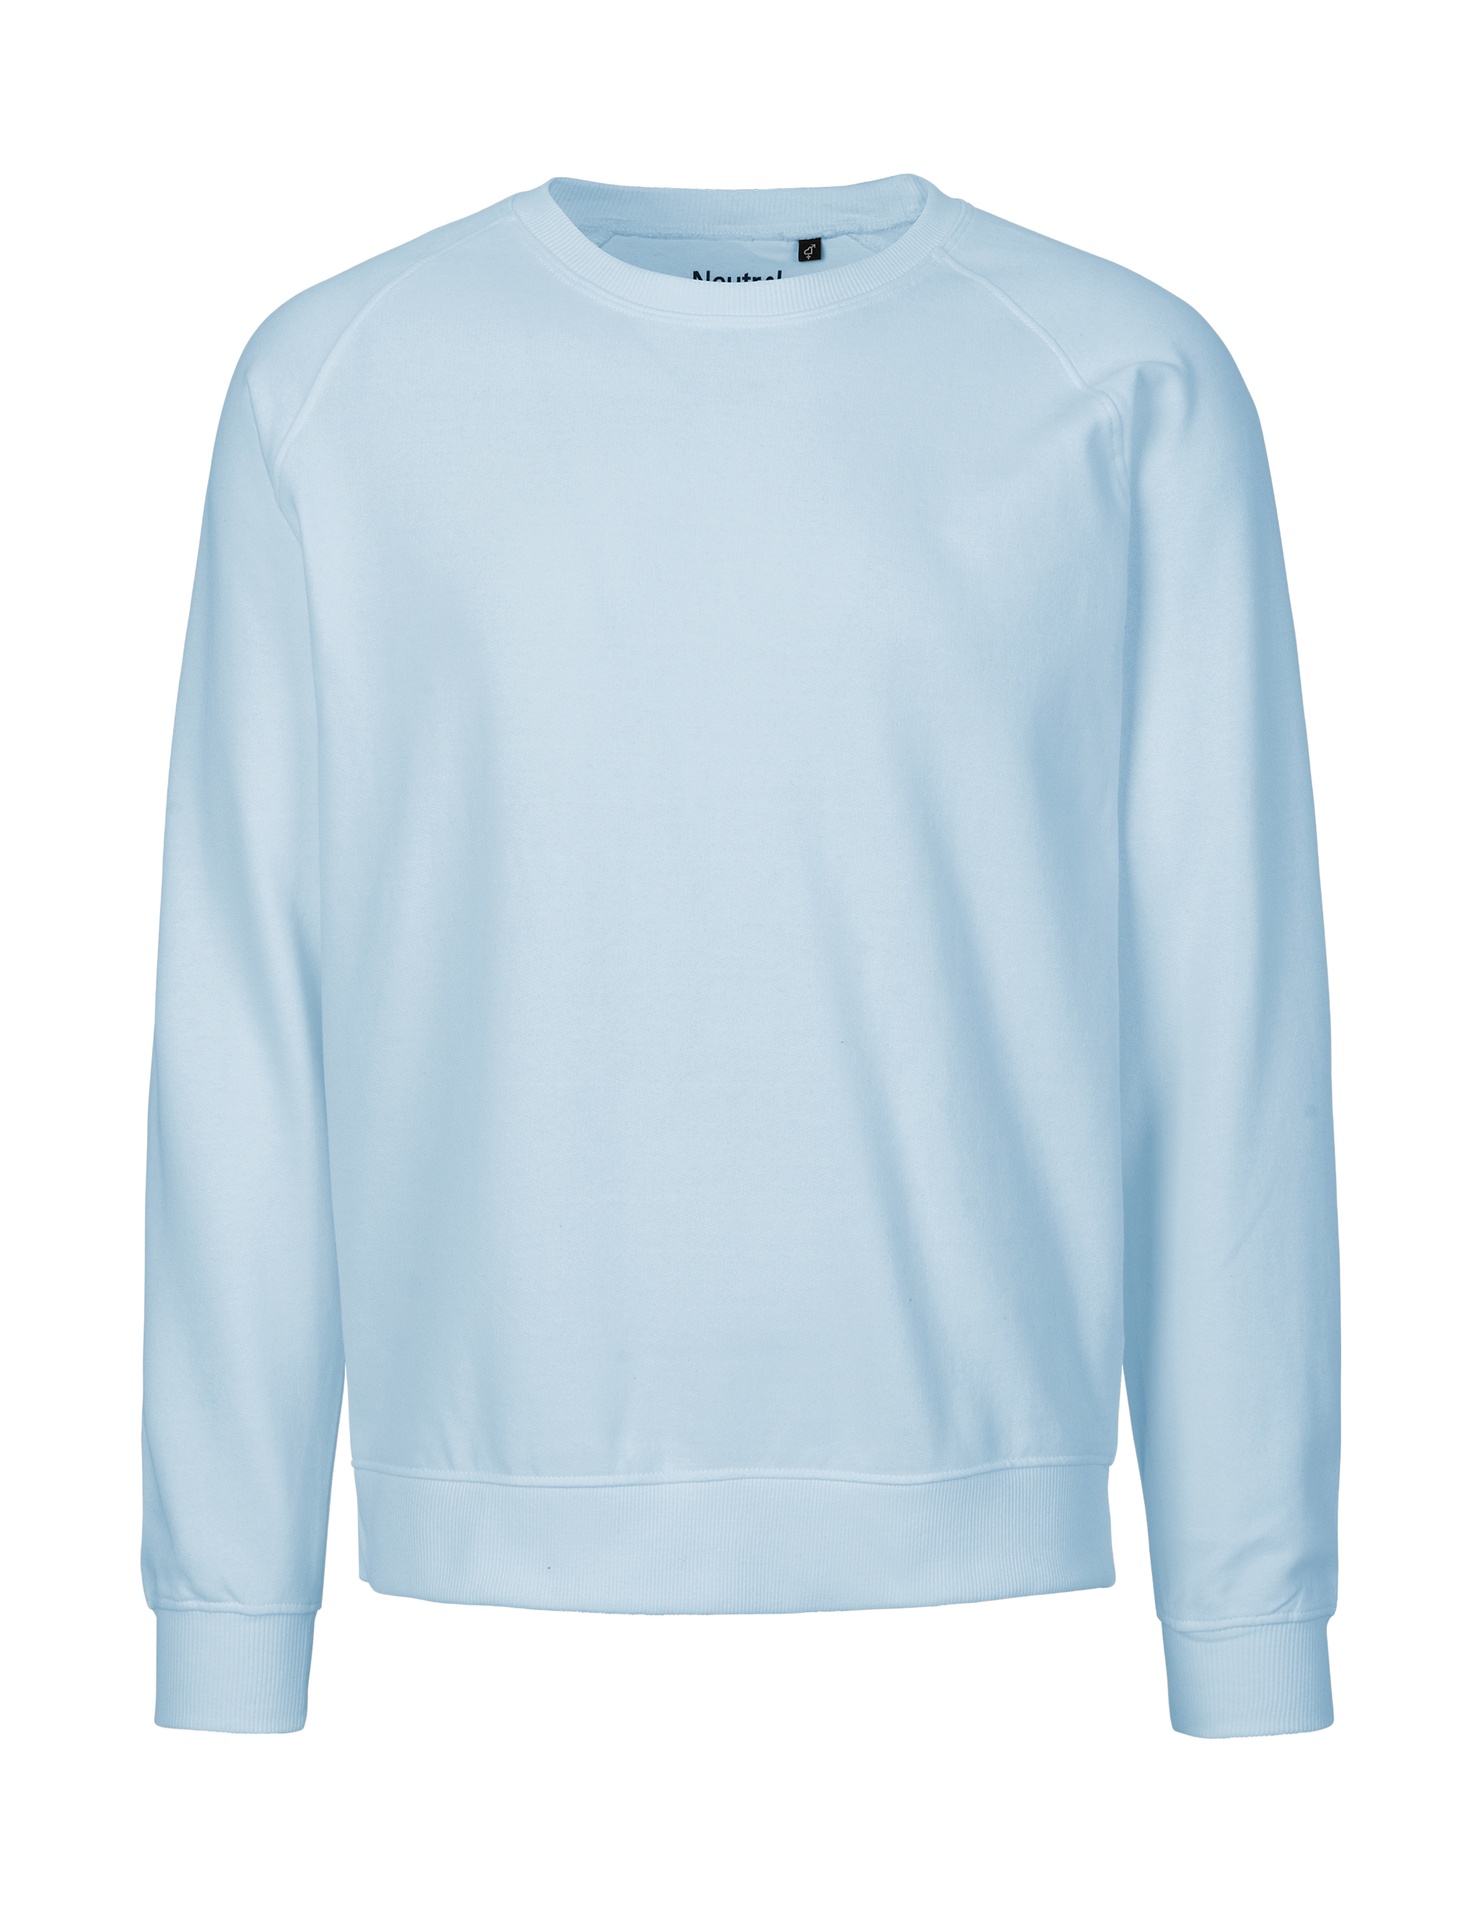 [PR/02886] Unisex Sweatshirt (Light Blue 69, XS)